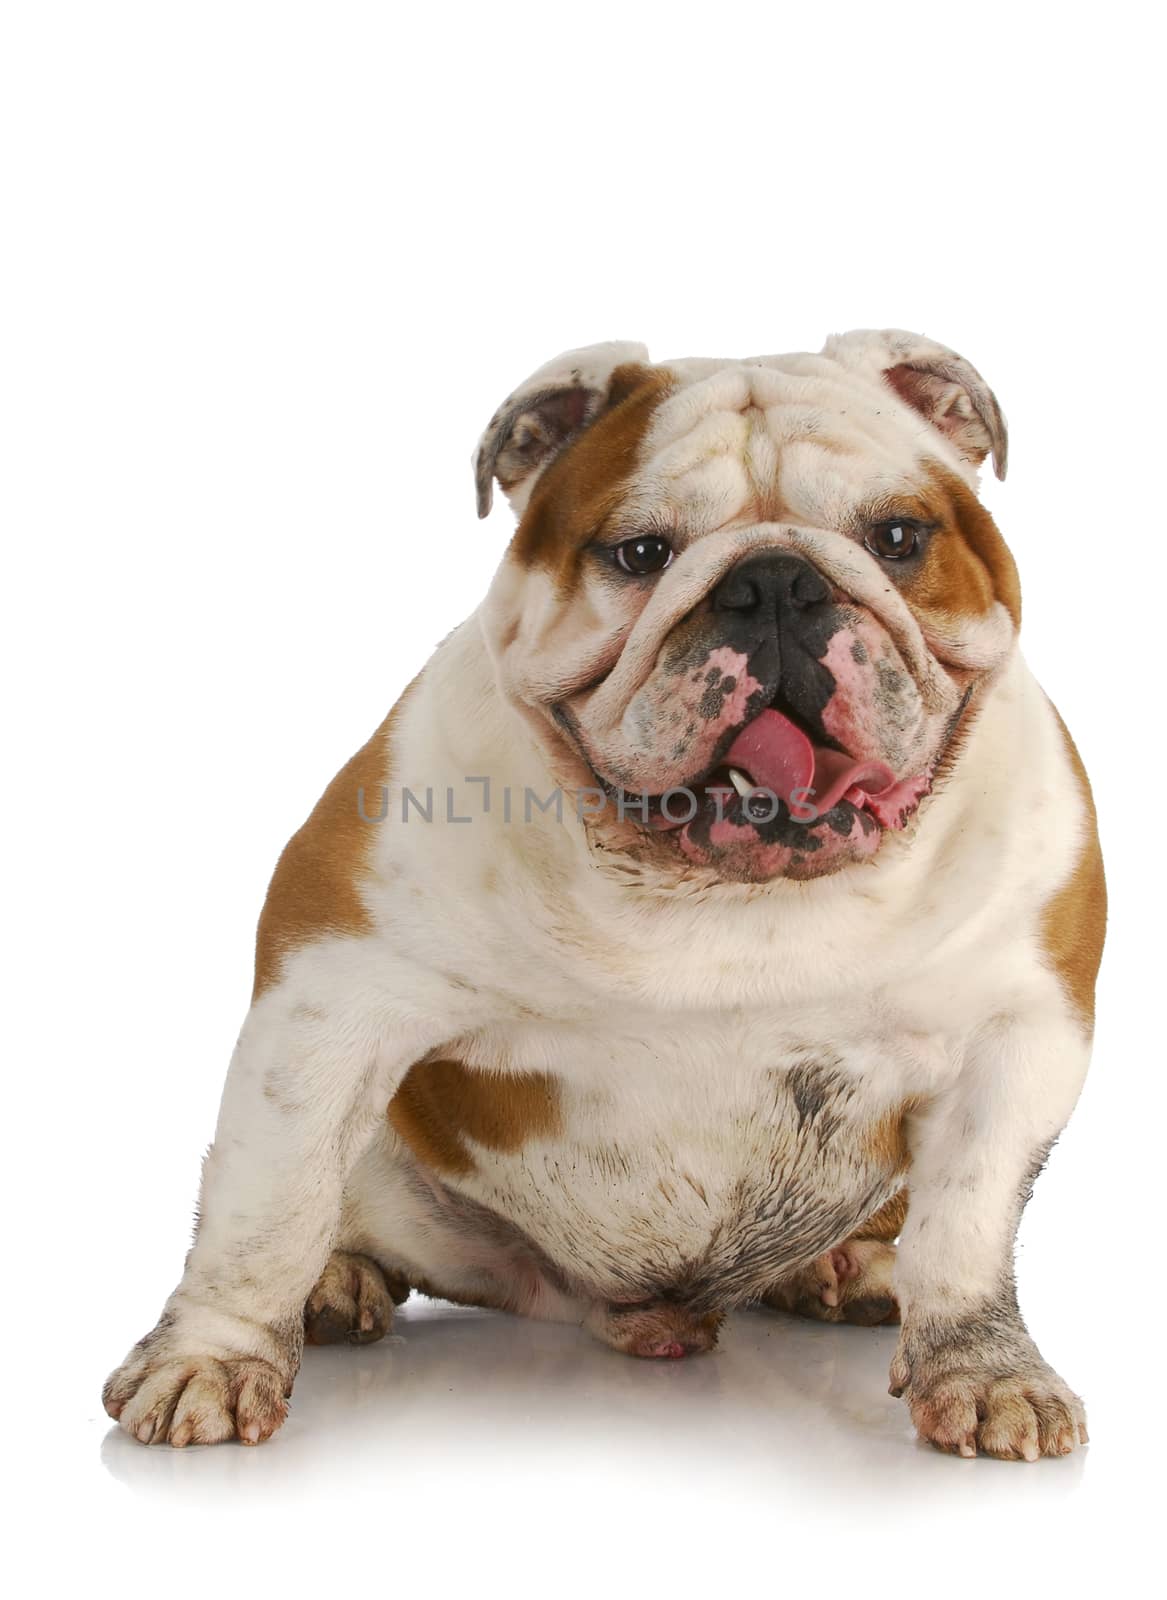 dirty dog - english bulldog muddy from playing outside on white background